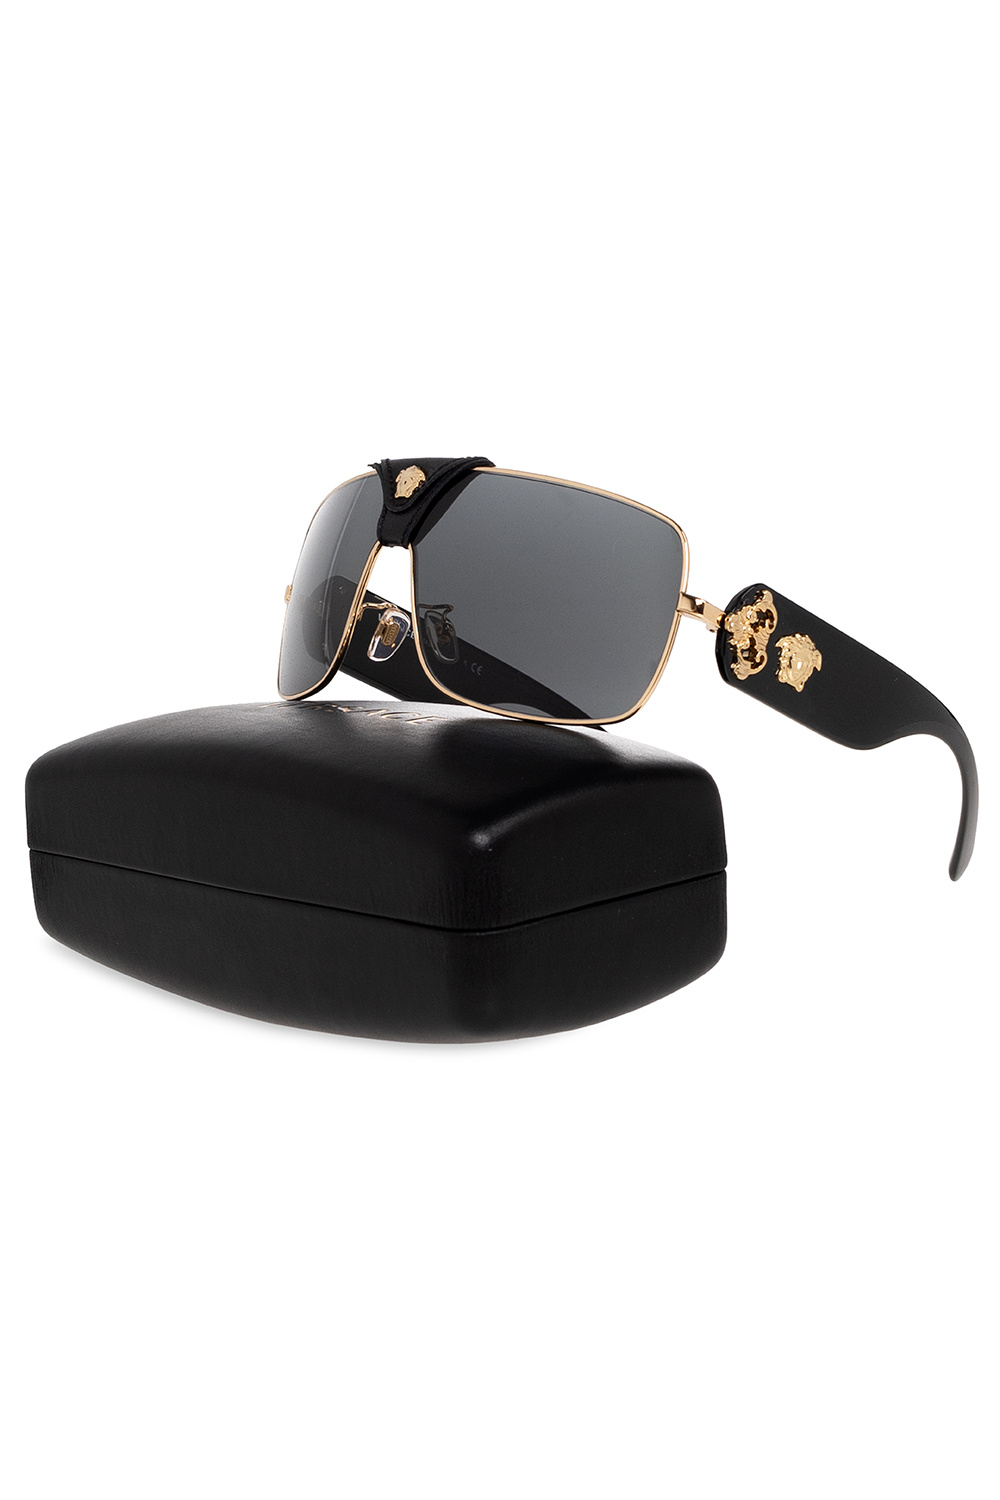 Versace Vava sunglasses MOSCOT for Women